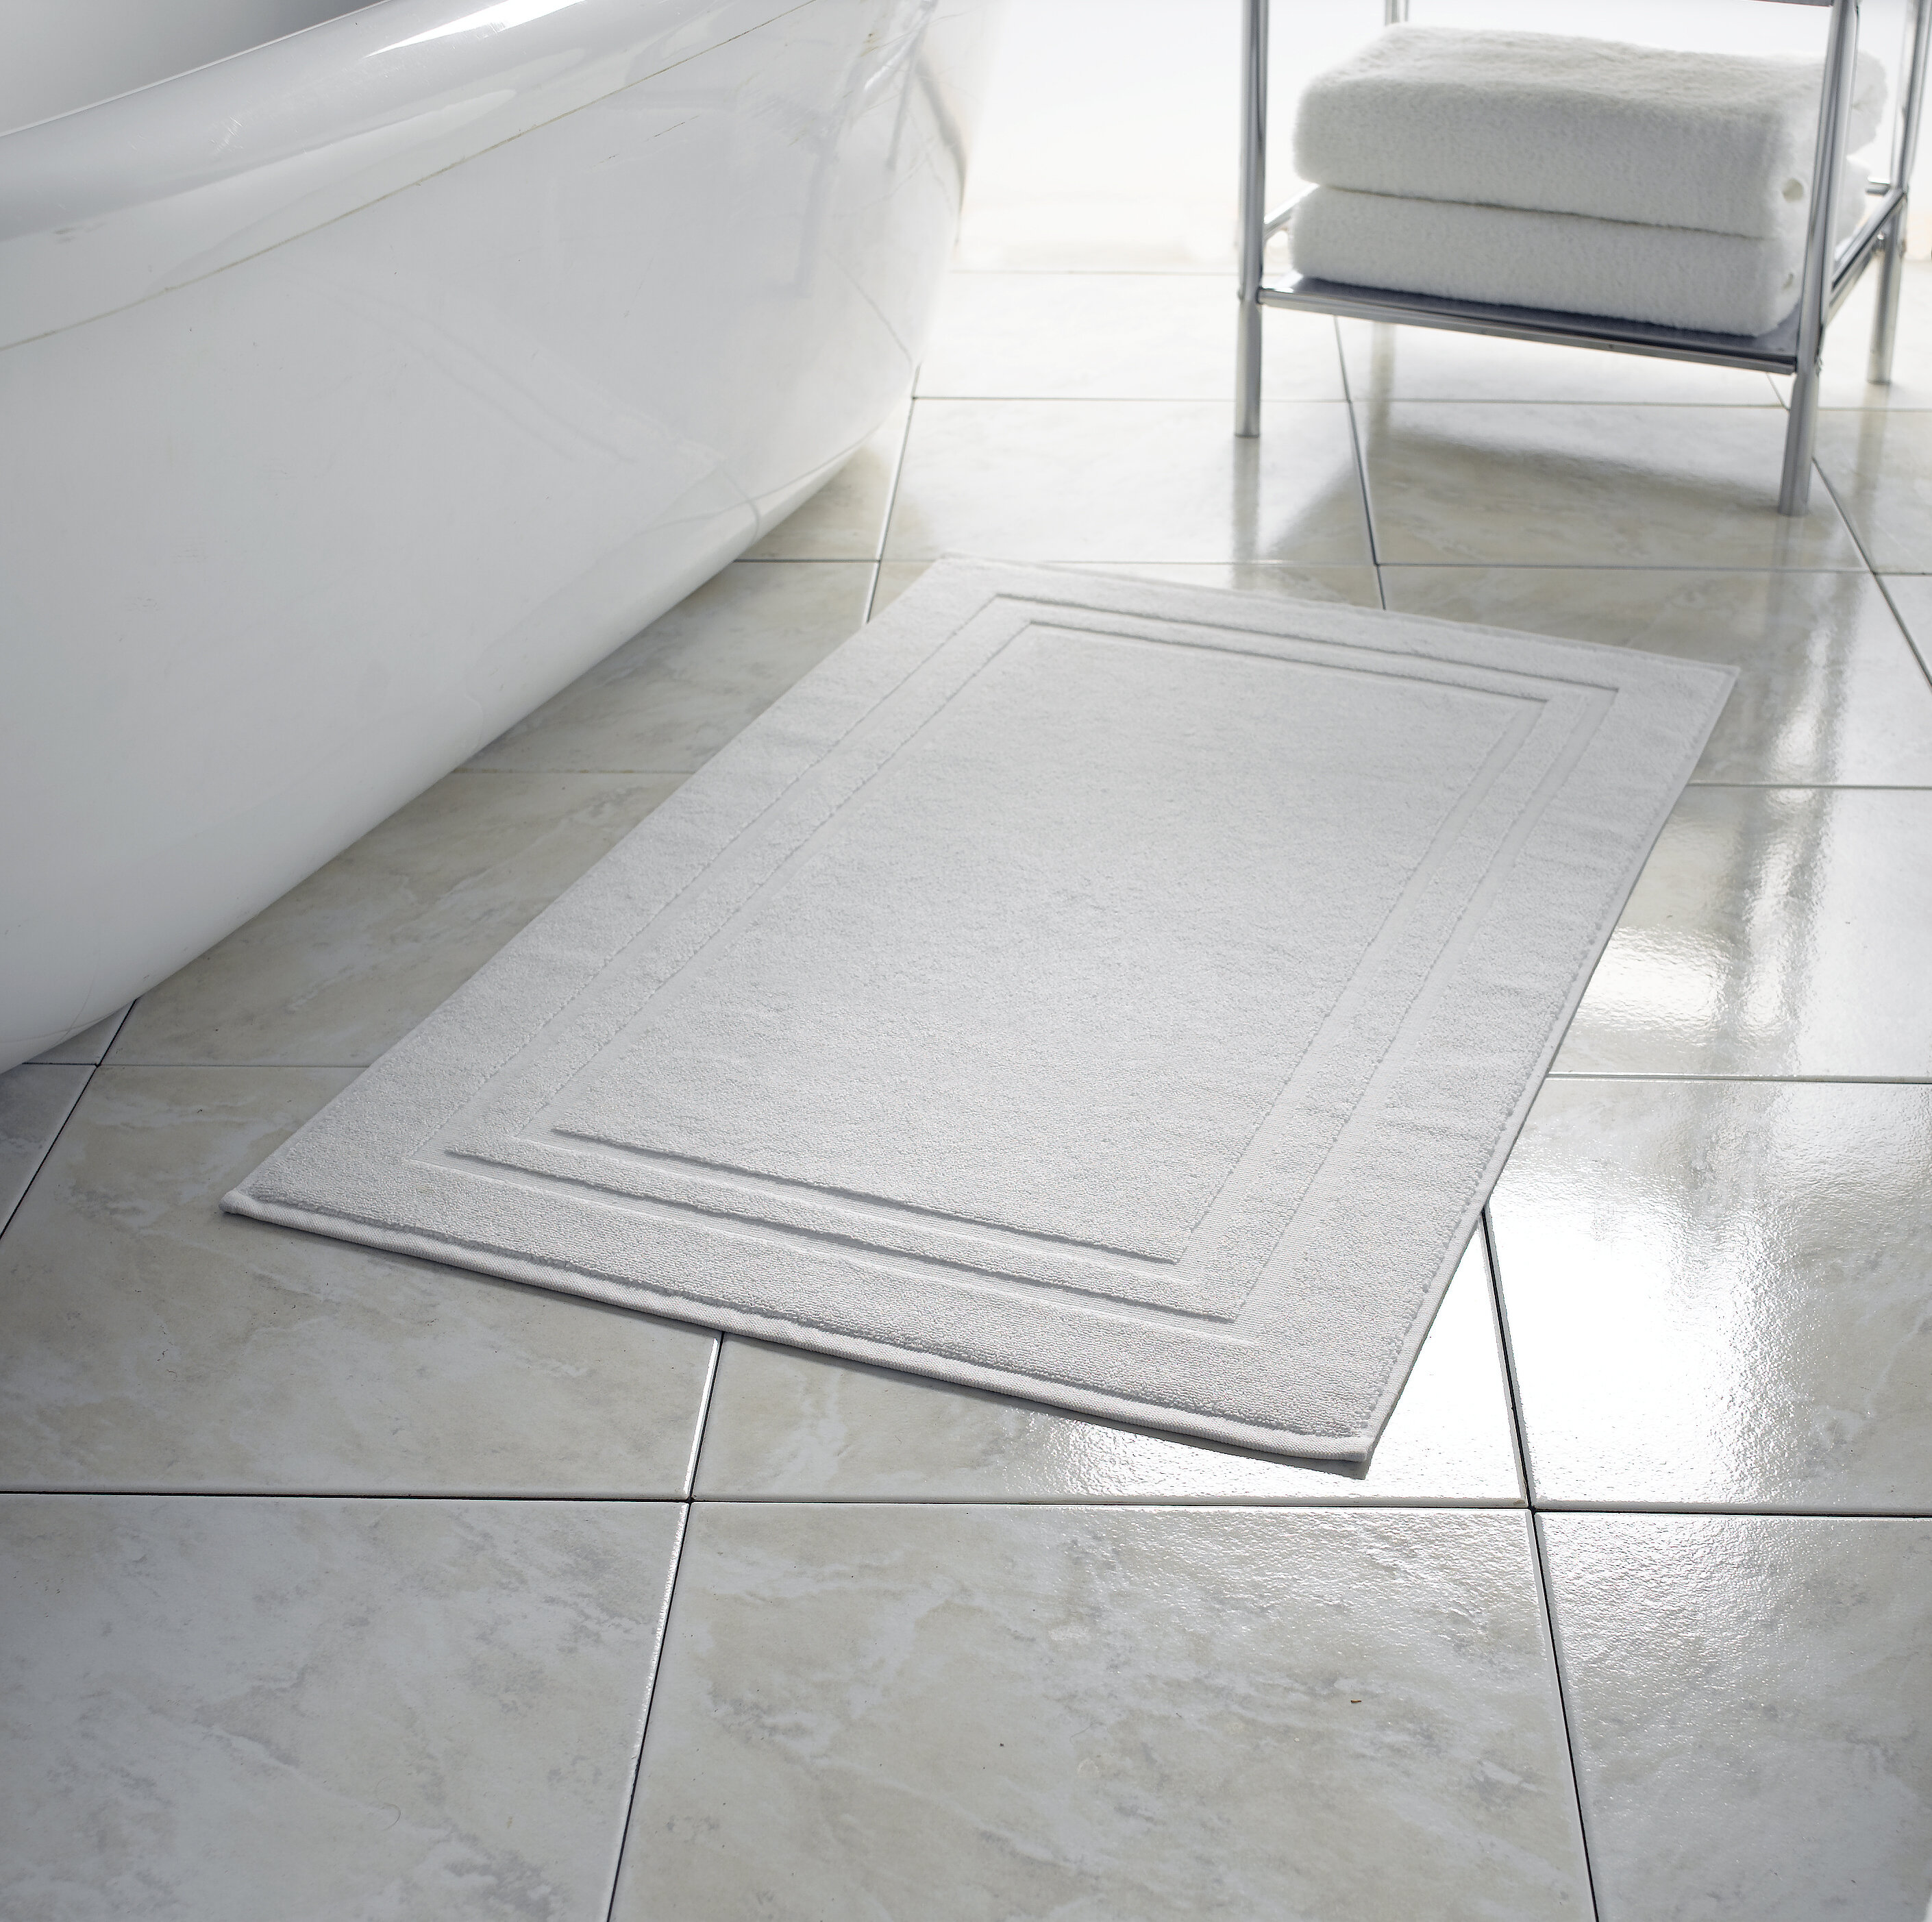 Total Fresh Antimicrobial Bath Towel White - Threshold™